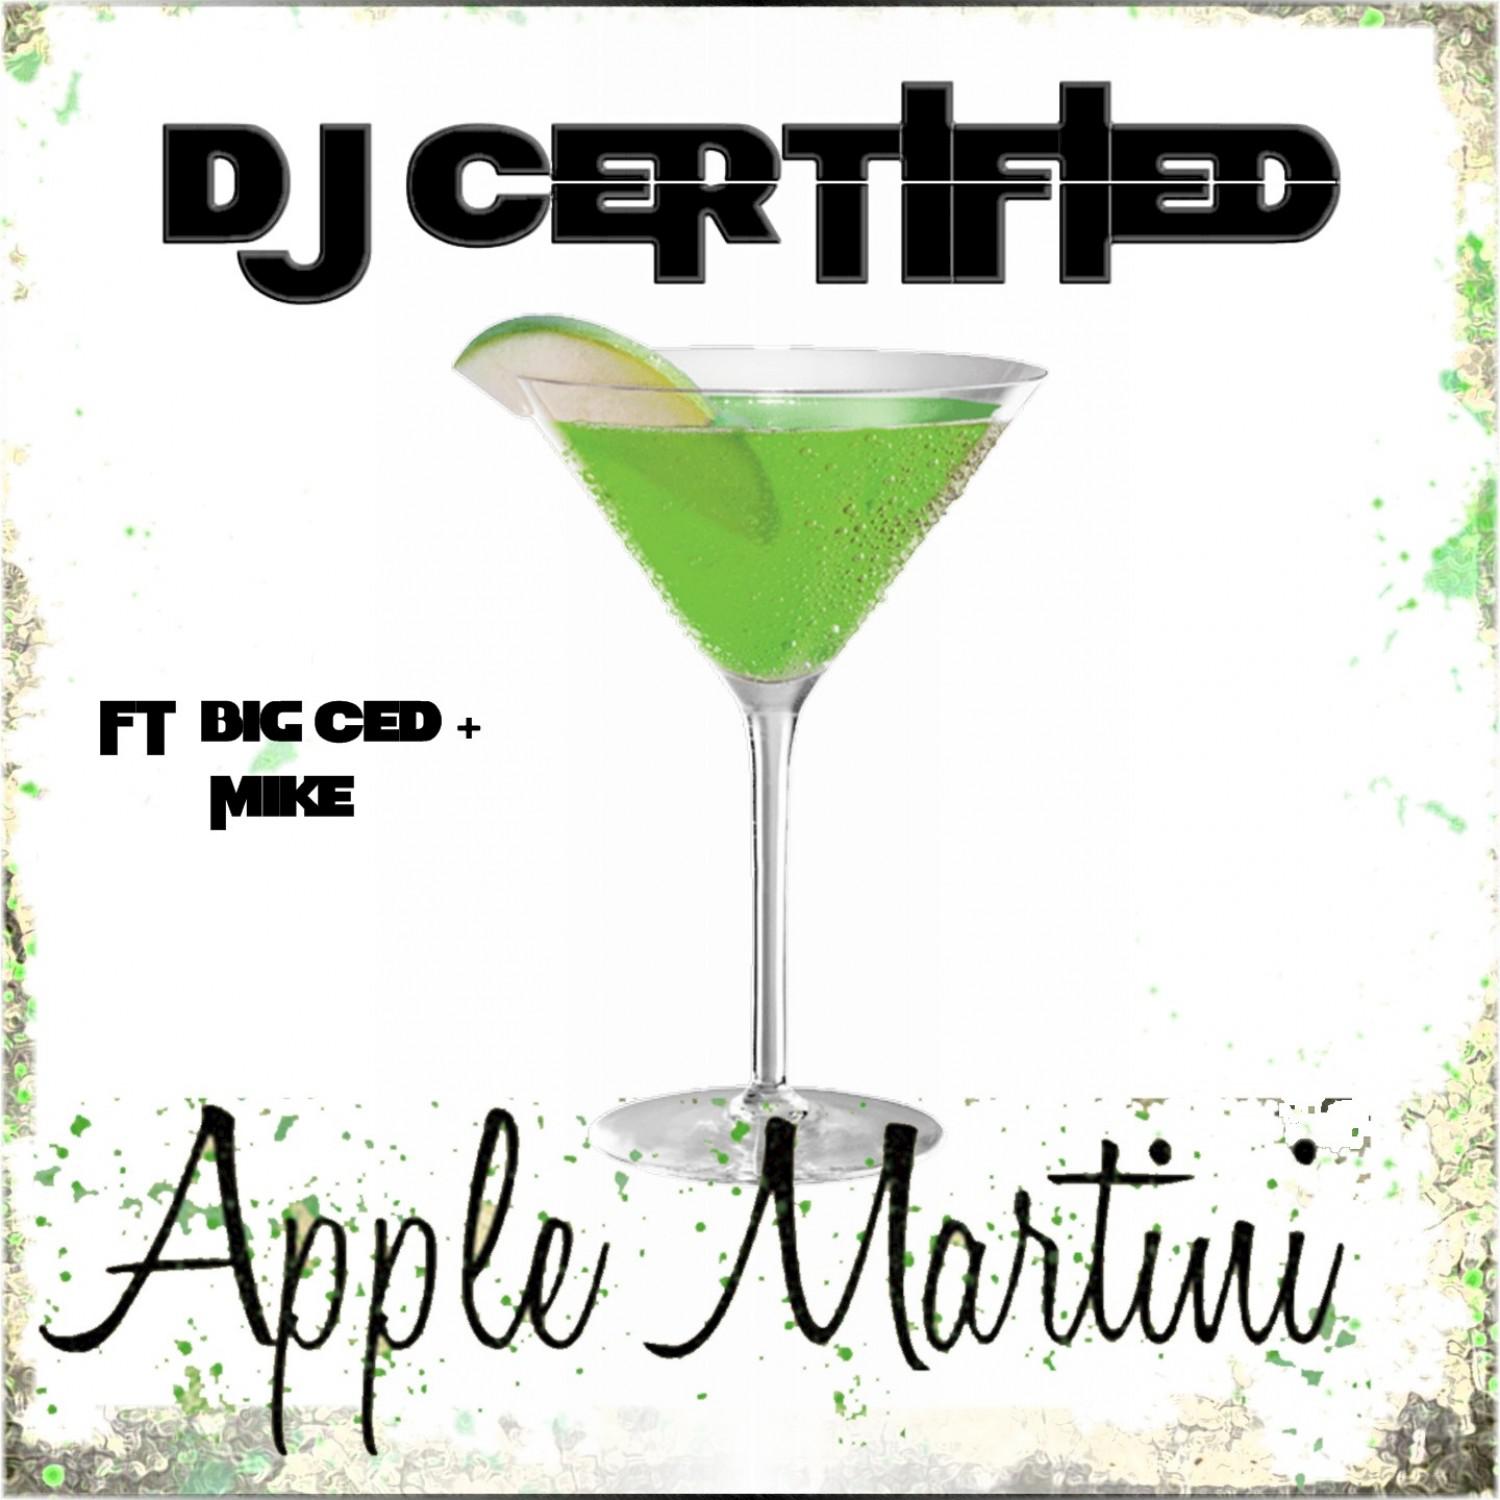 Apple Martini (feat. Big Ced, Mike) - Single